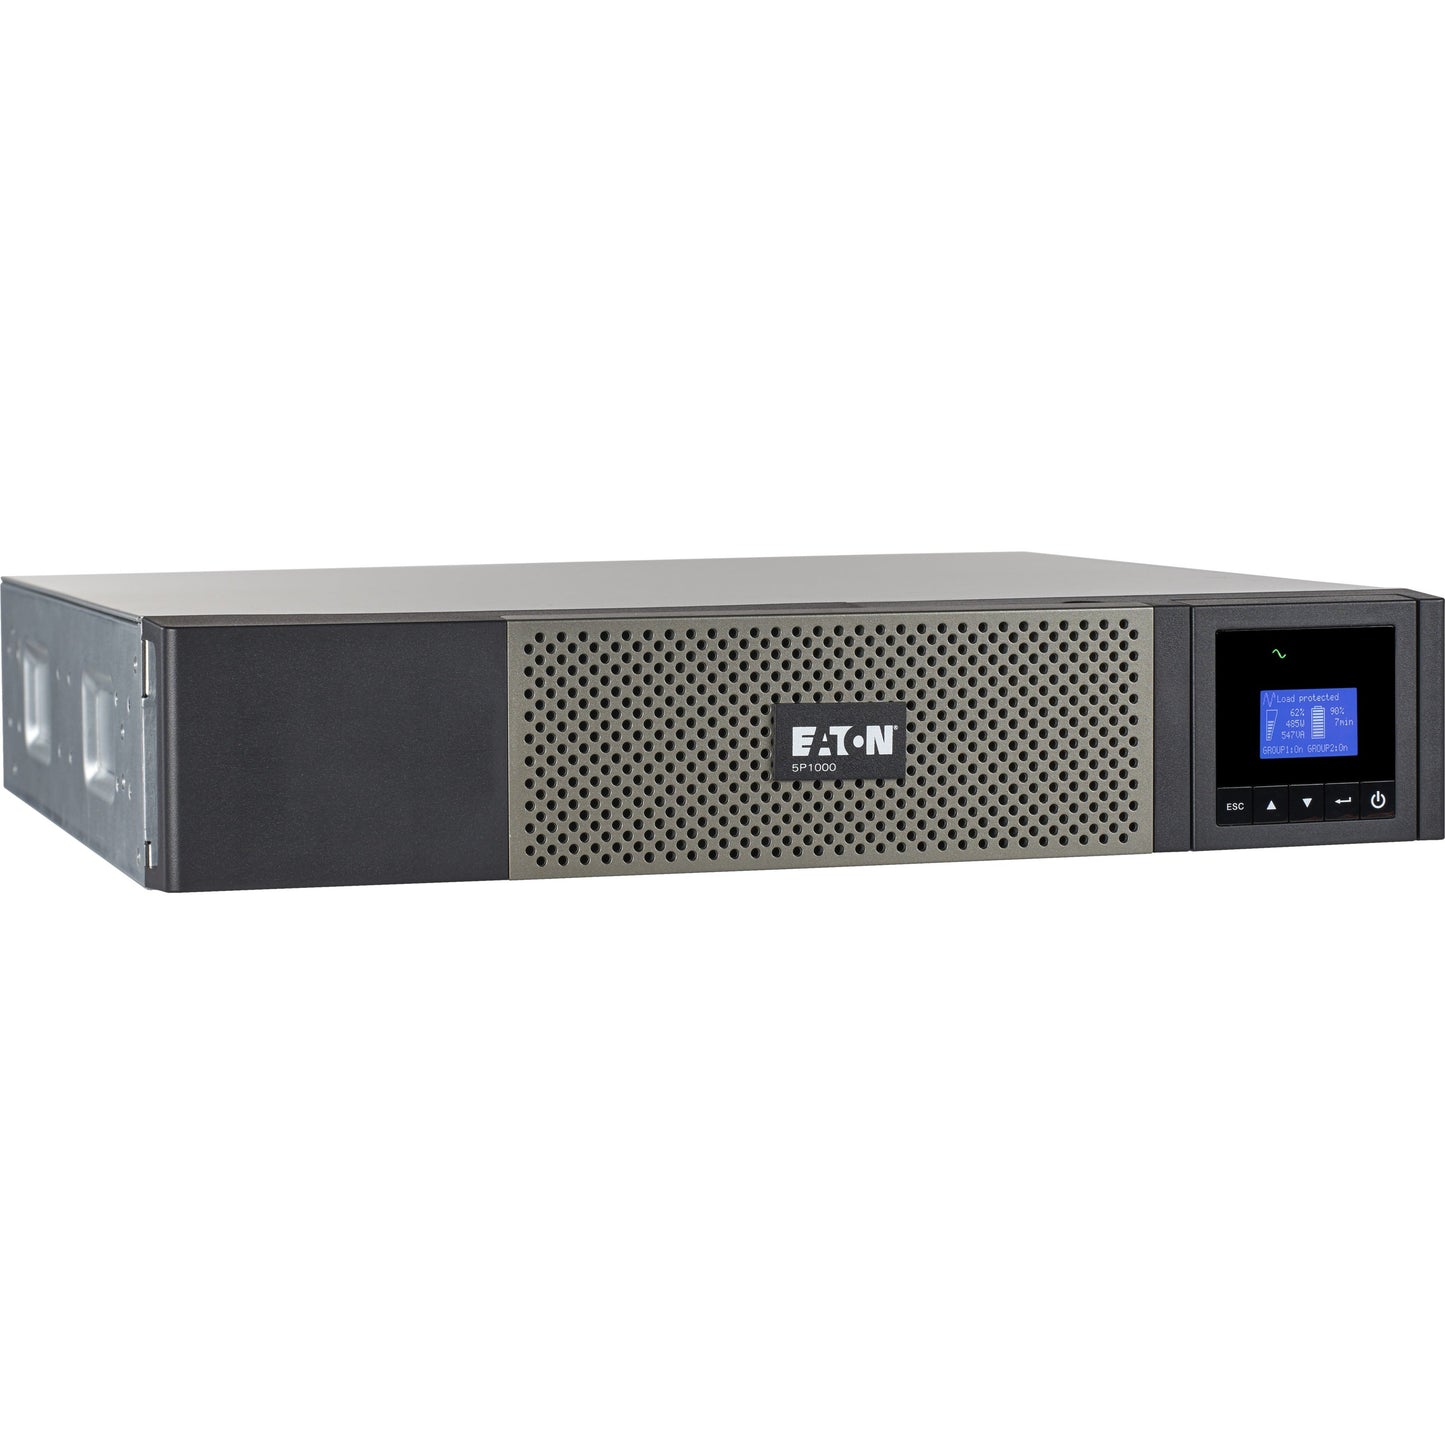 Eaton 5P UPS 1000VA 770W 120V Line-Interactive UPS 5-15P 10x 5-15R Outlets 16-Inch Depth True Sine Wave Cybersecure Network Card Option 2U